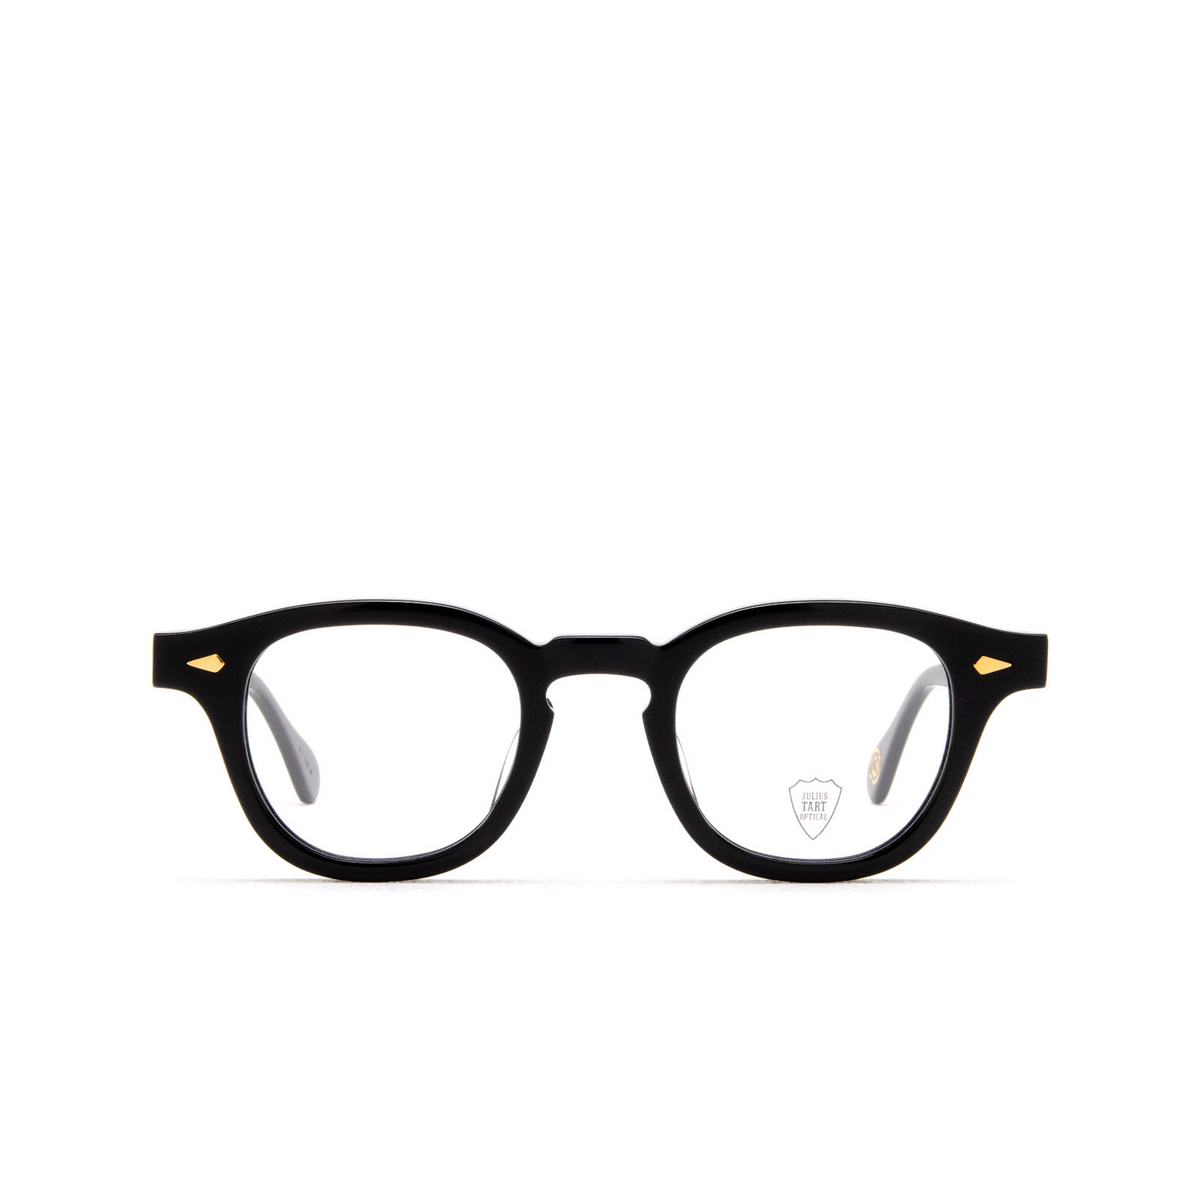 Julius Tart AR Eyeglasses BLACK (GOLD) - front view